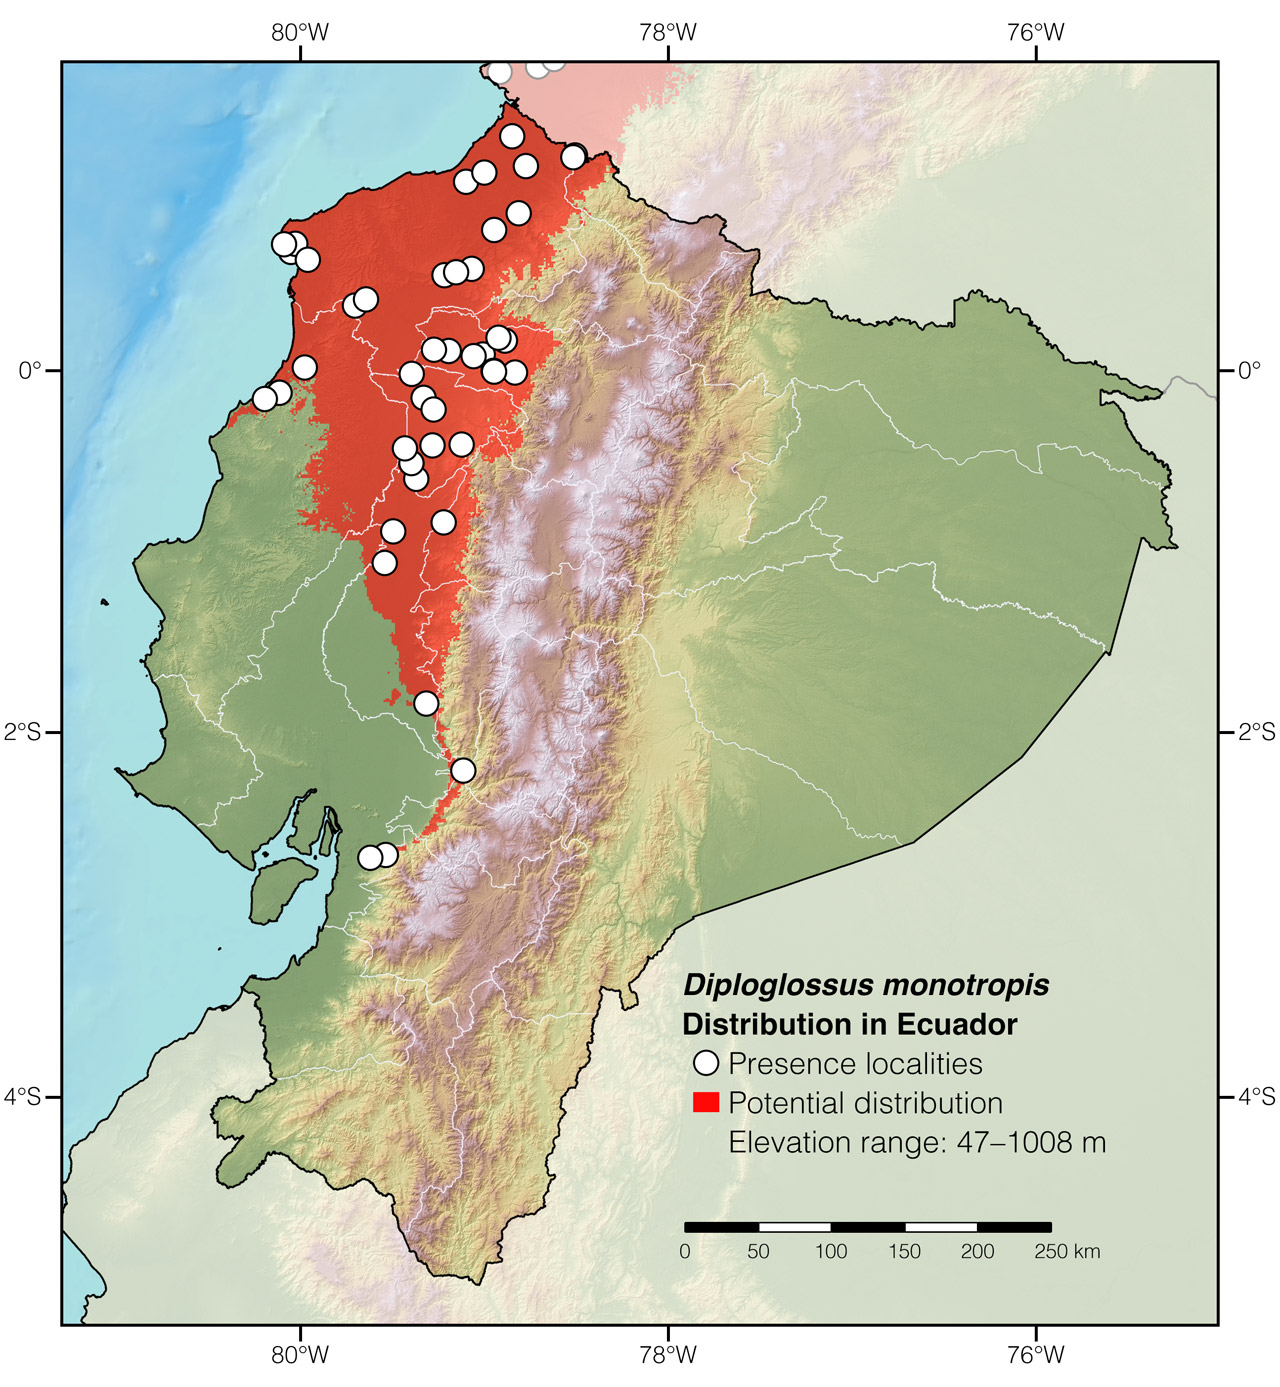 Distribution of Diploglossus monotropis in Ecuador